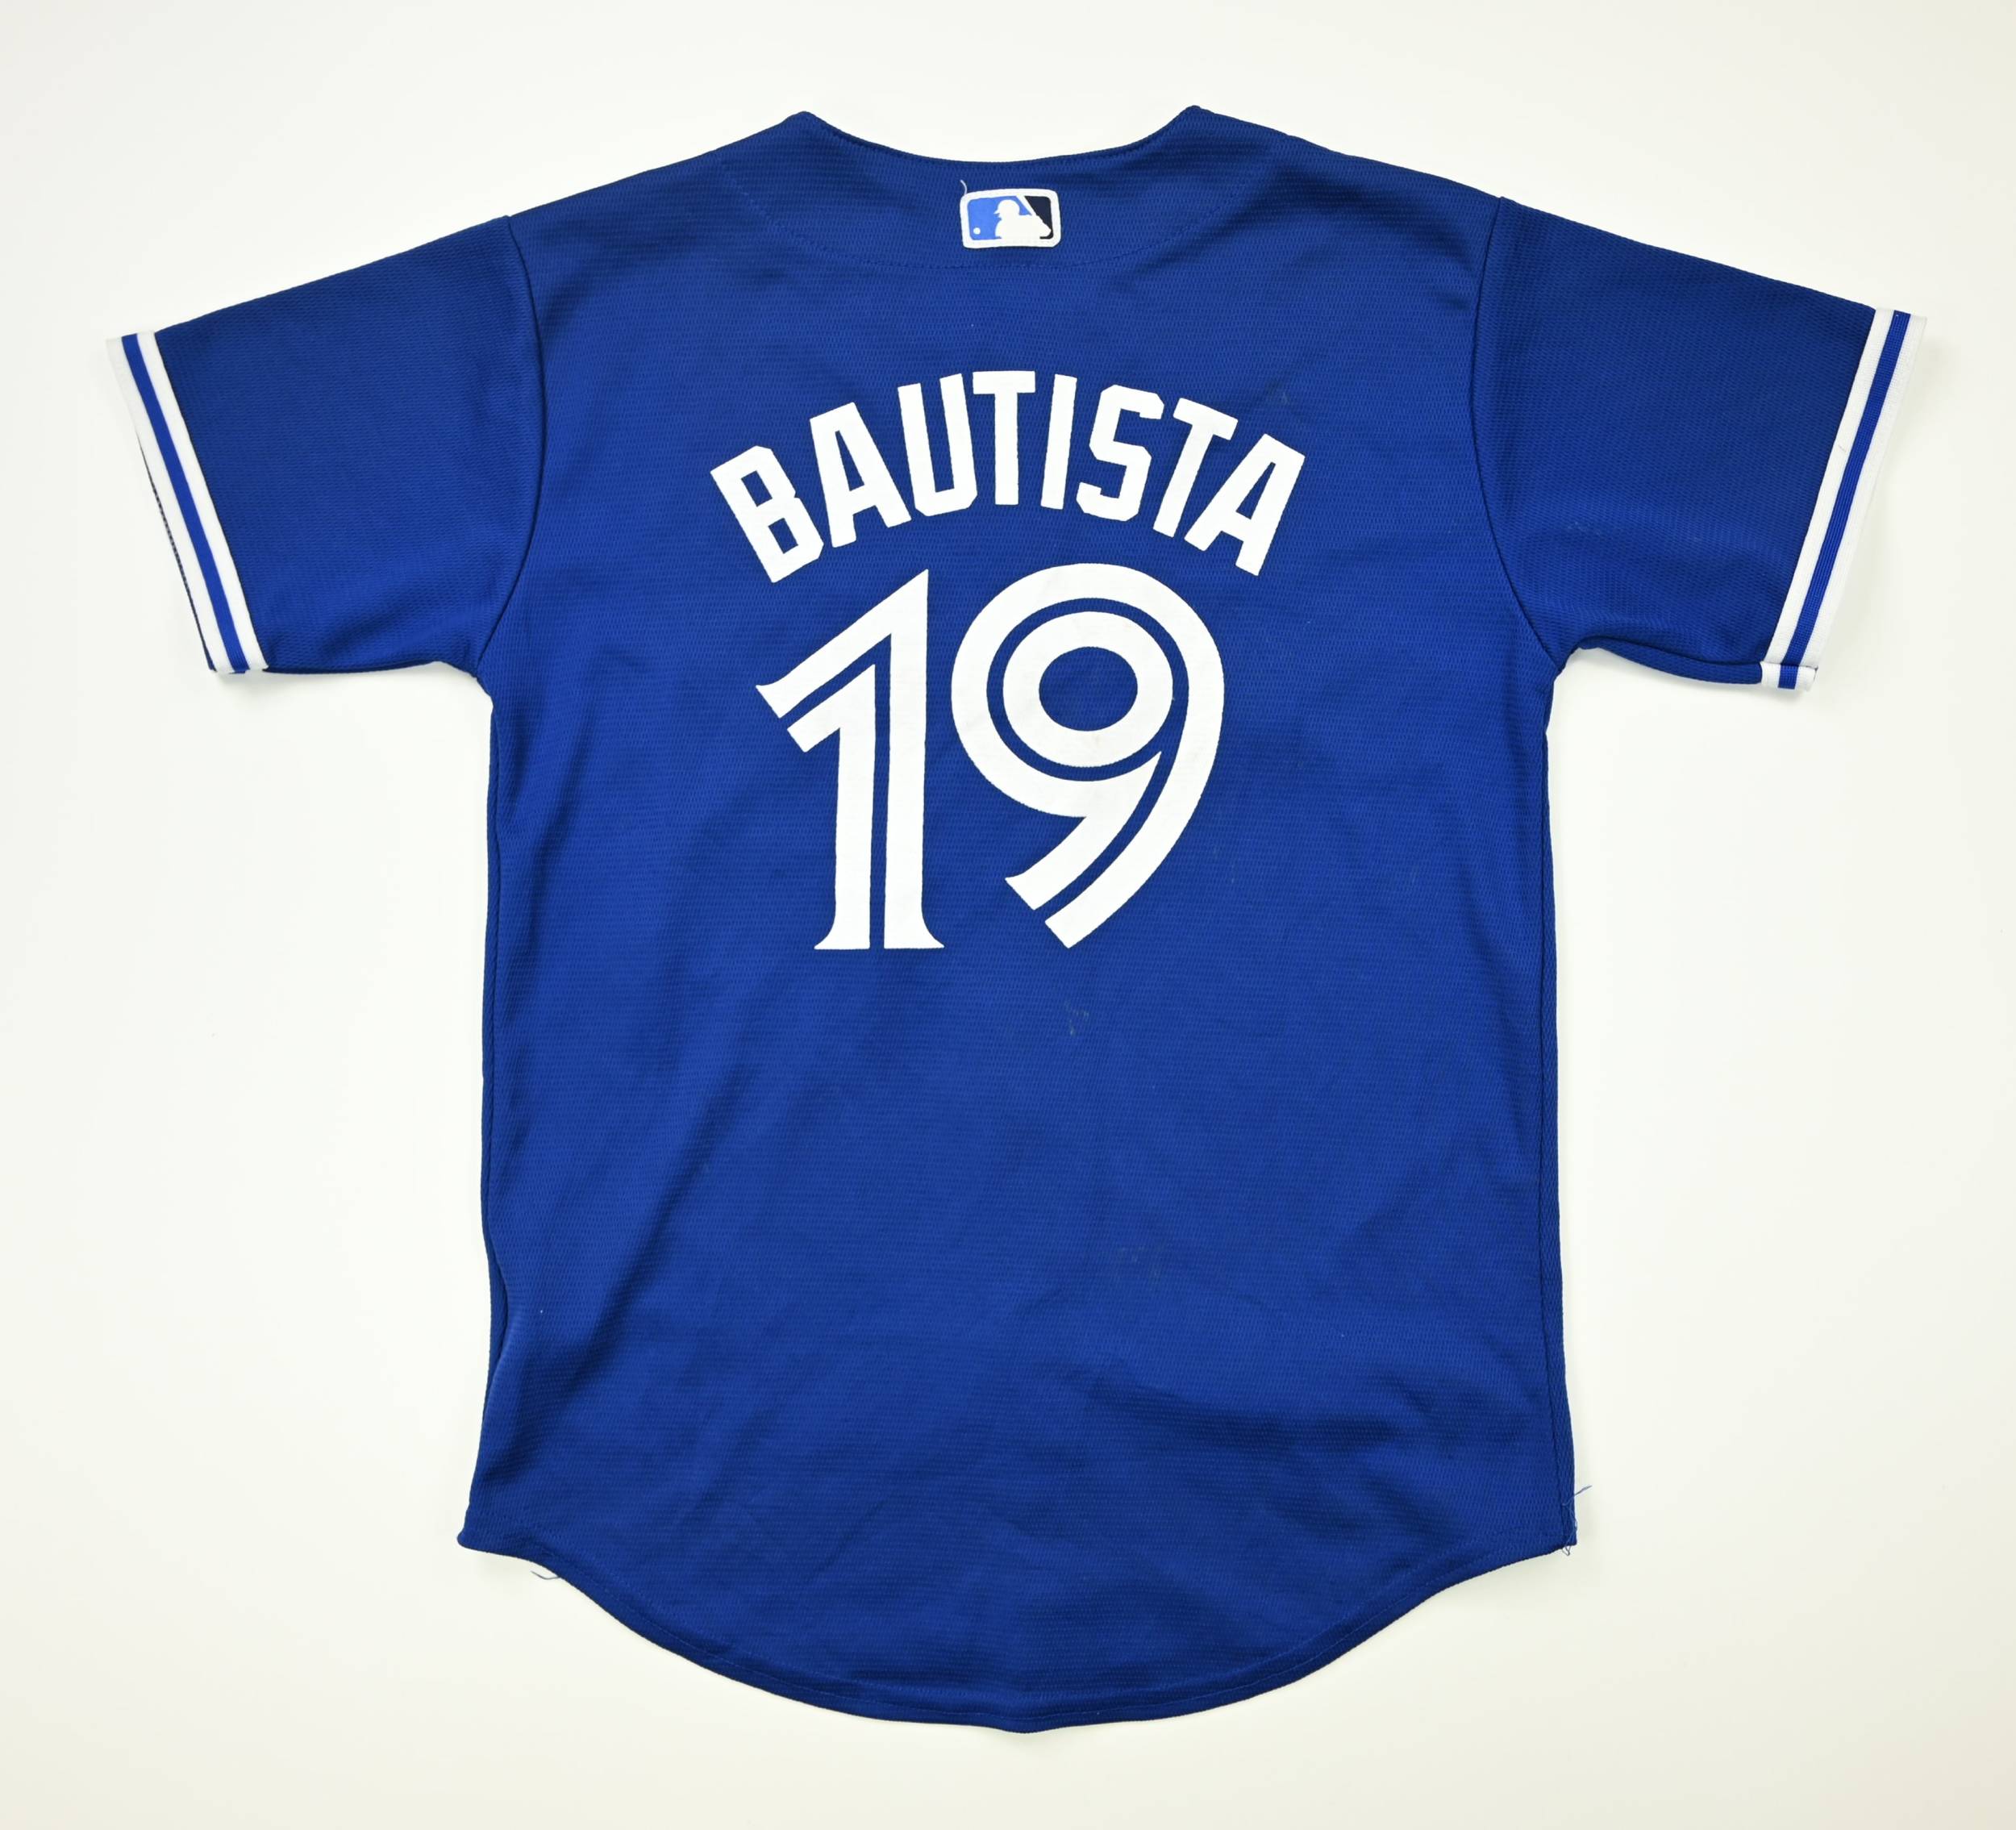 Jose Bautista MLB Jerseys for sale